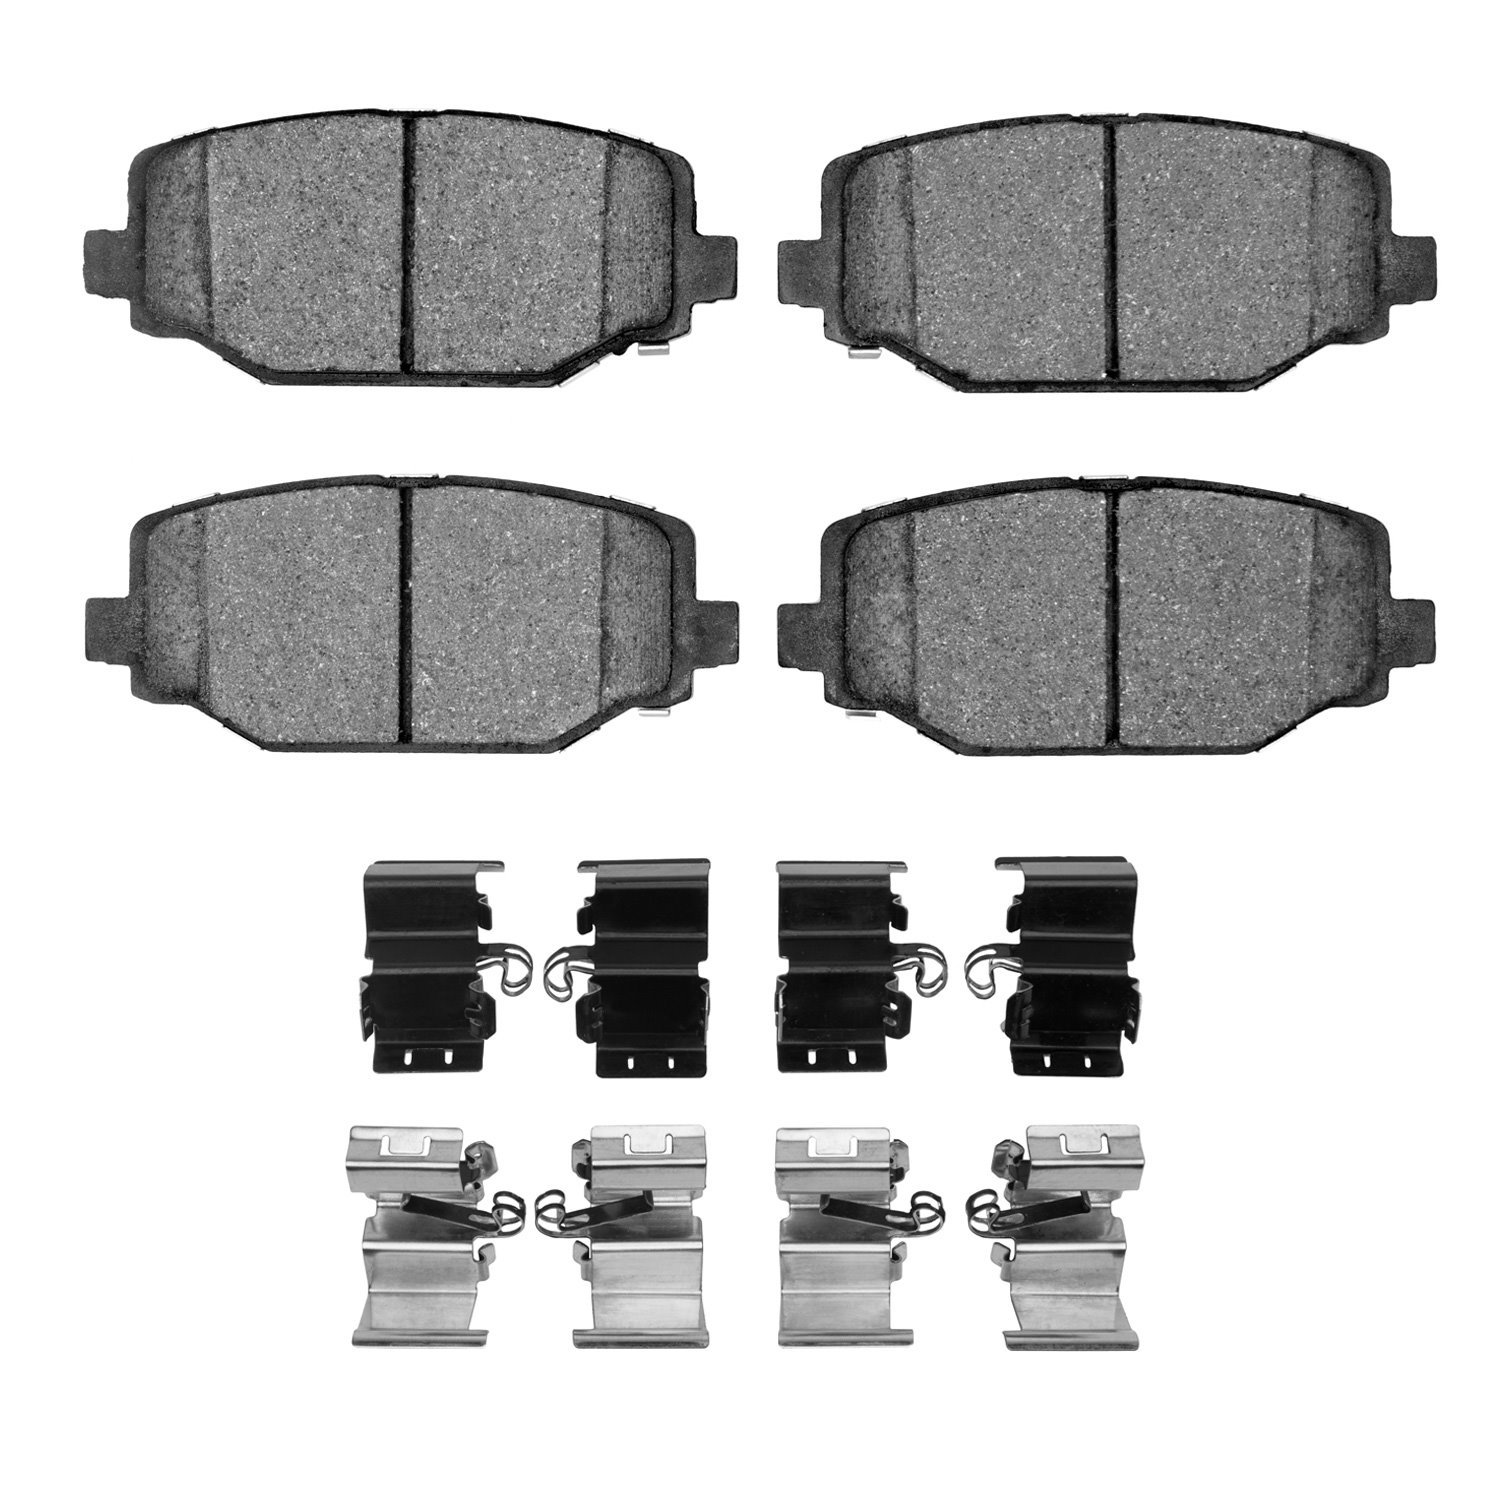 1310-1596-01 3000-Series Ceramic Brake Pads & Hardware Kit, 2012-2020 Multiple Makes/Models, Position: Rear